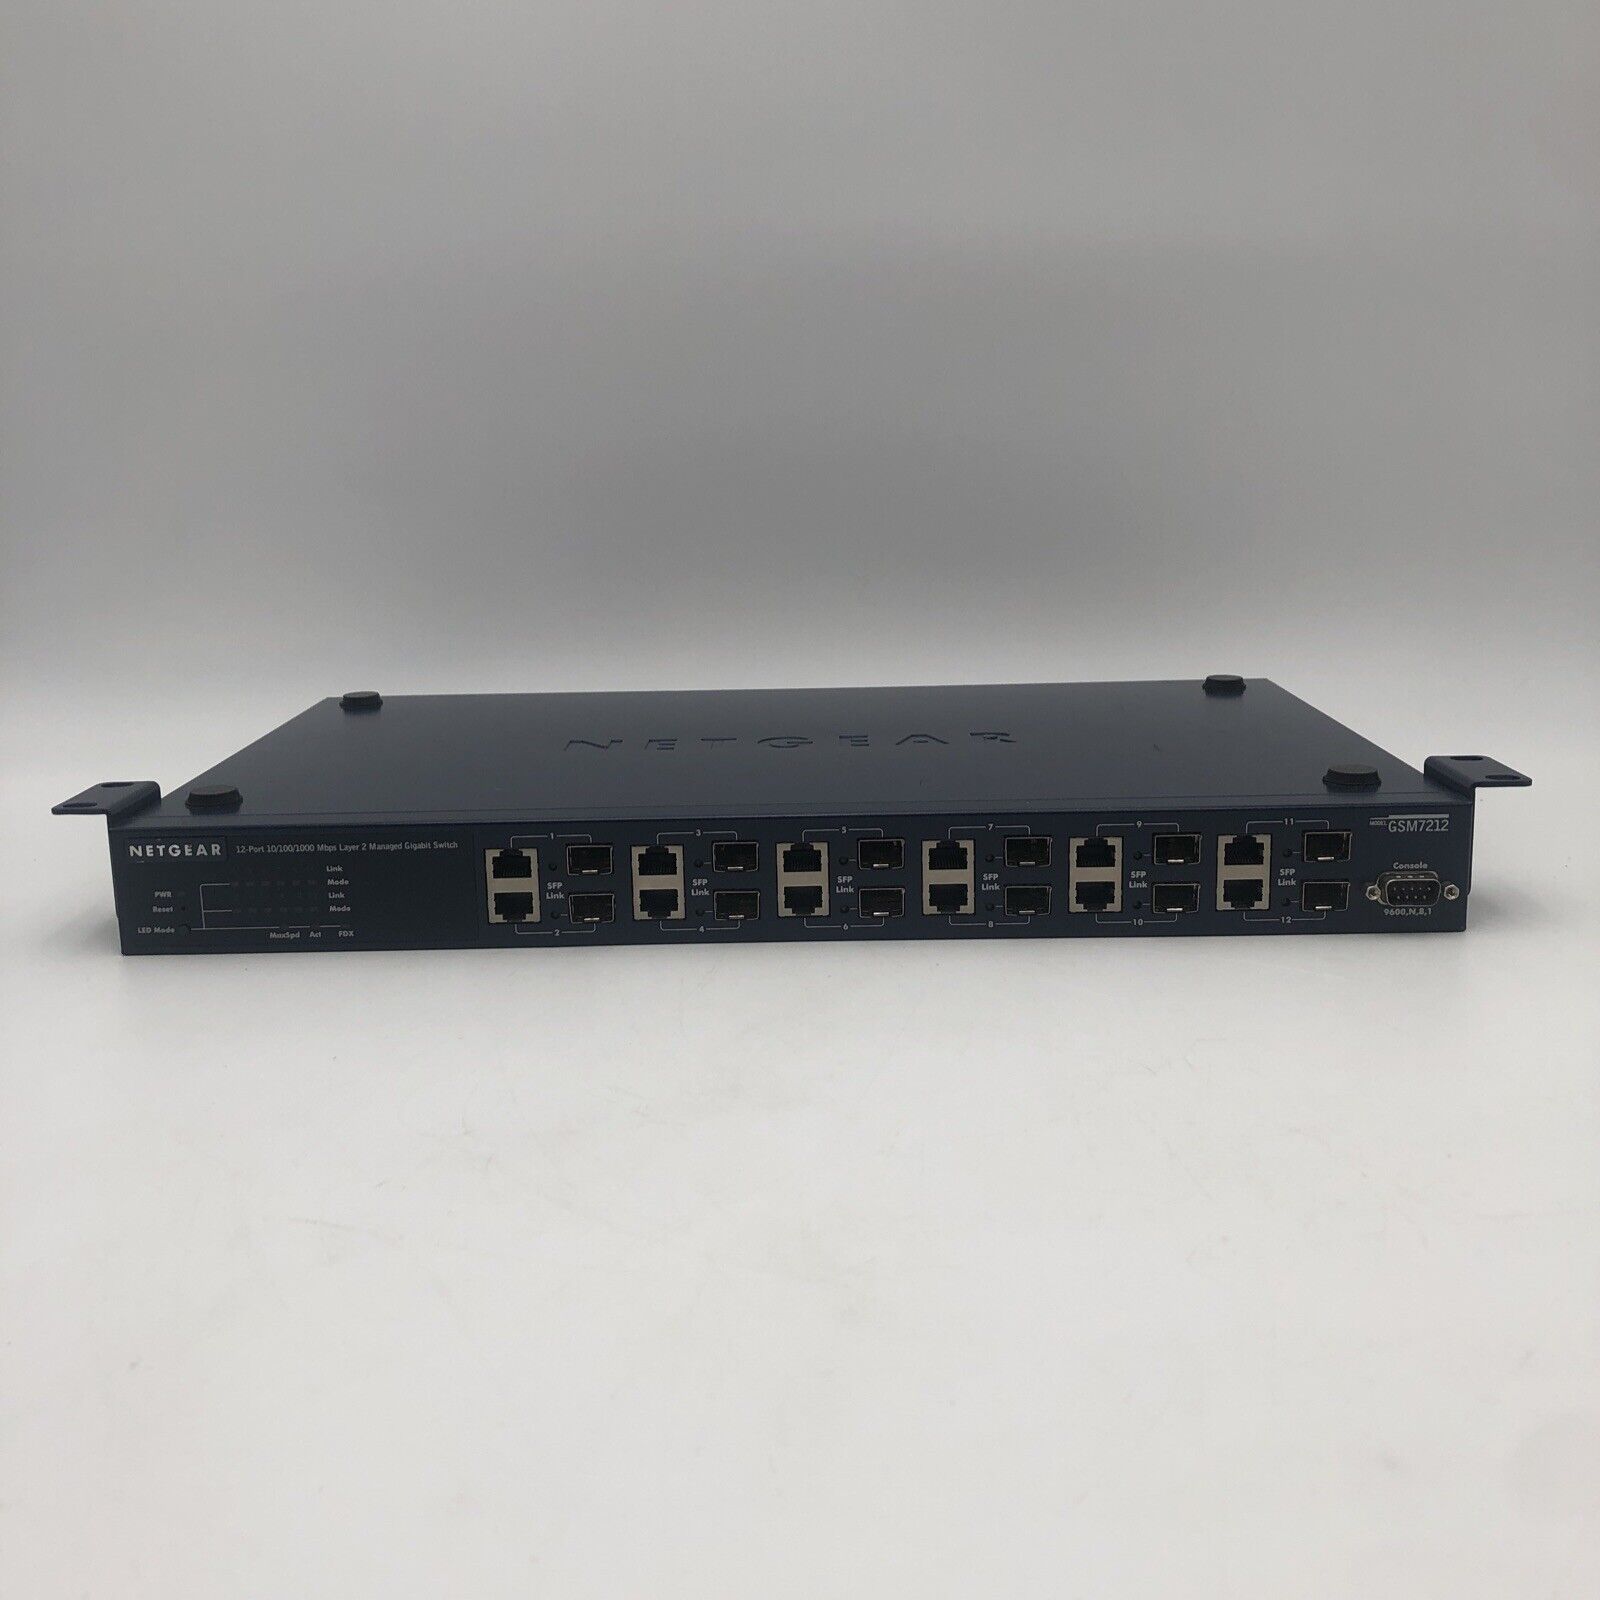 Netgear ProSafe GSM7212 12-Port 10/100/1000 Mbps L2 Managed Switch POWER REPAIR